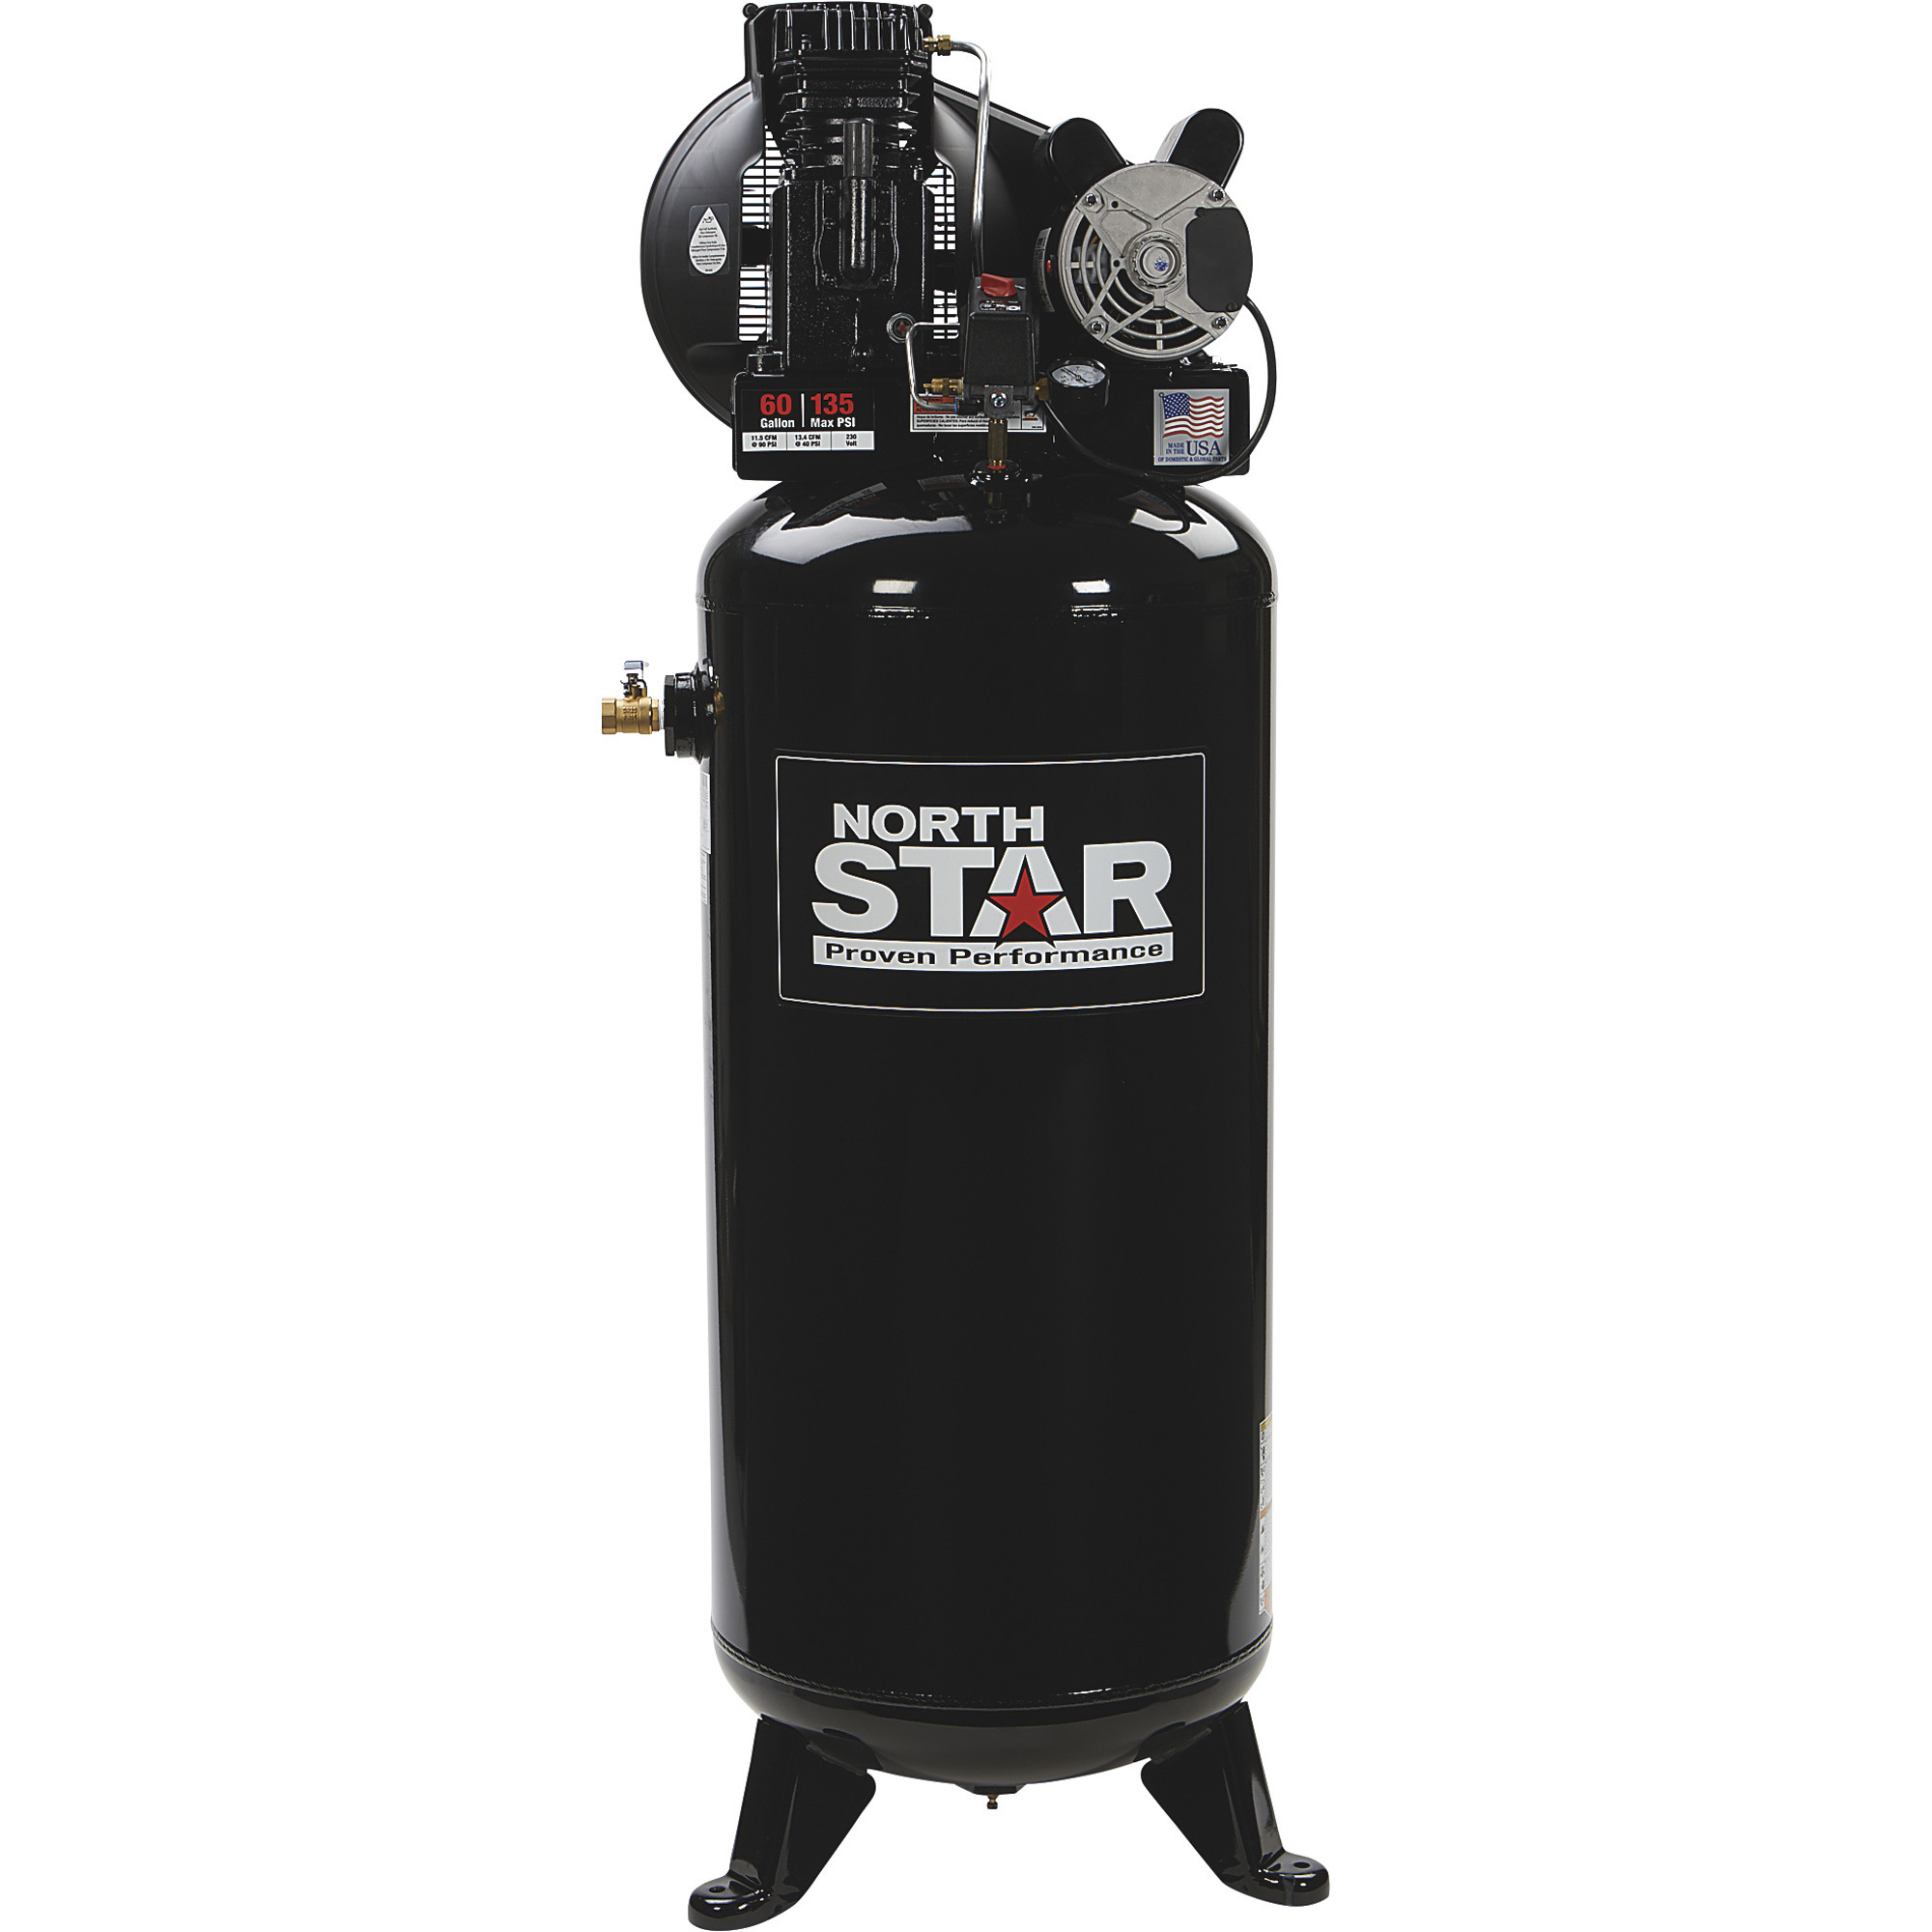 NorthStar Electric Air Compressor, 3.7 HP, 230 Volt, 1 Phase, 60-Gallon Vertical Tank